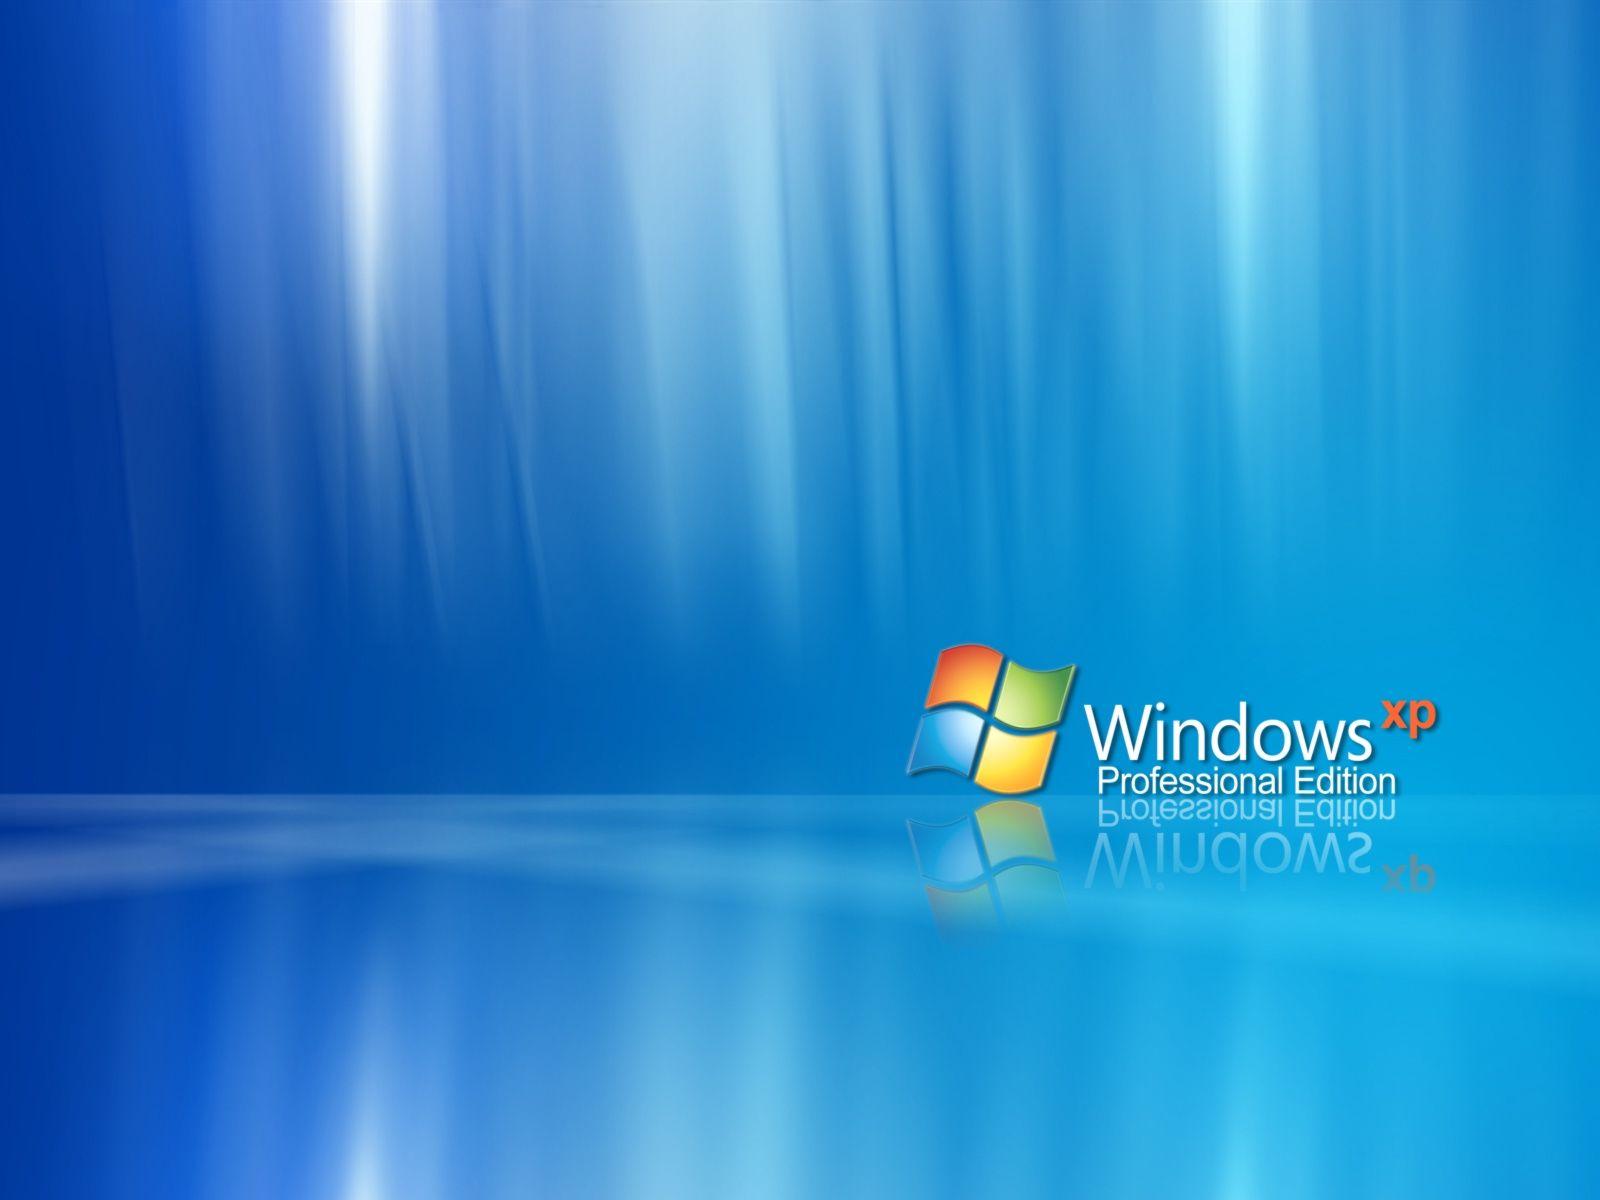 Windows XP Pro wallpaper. Windows XP Pro